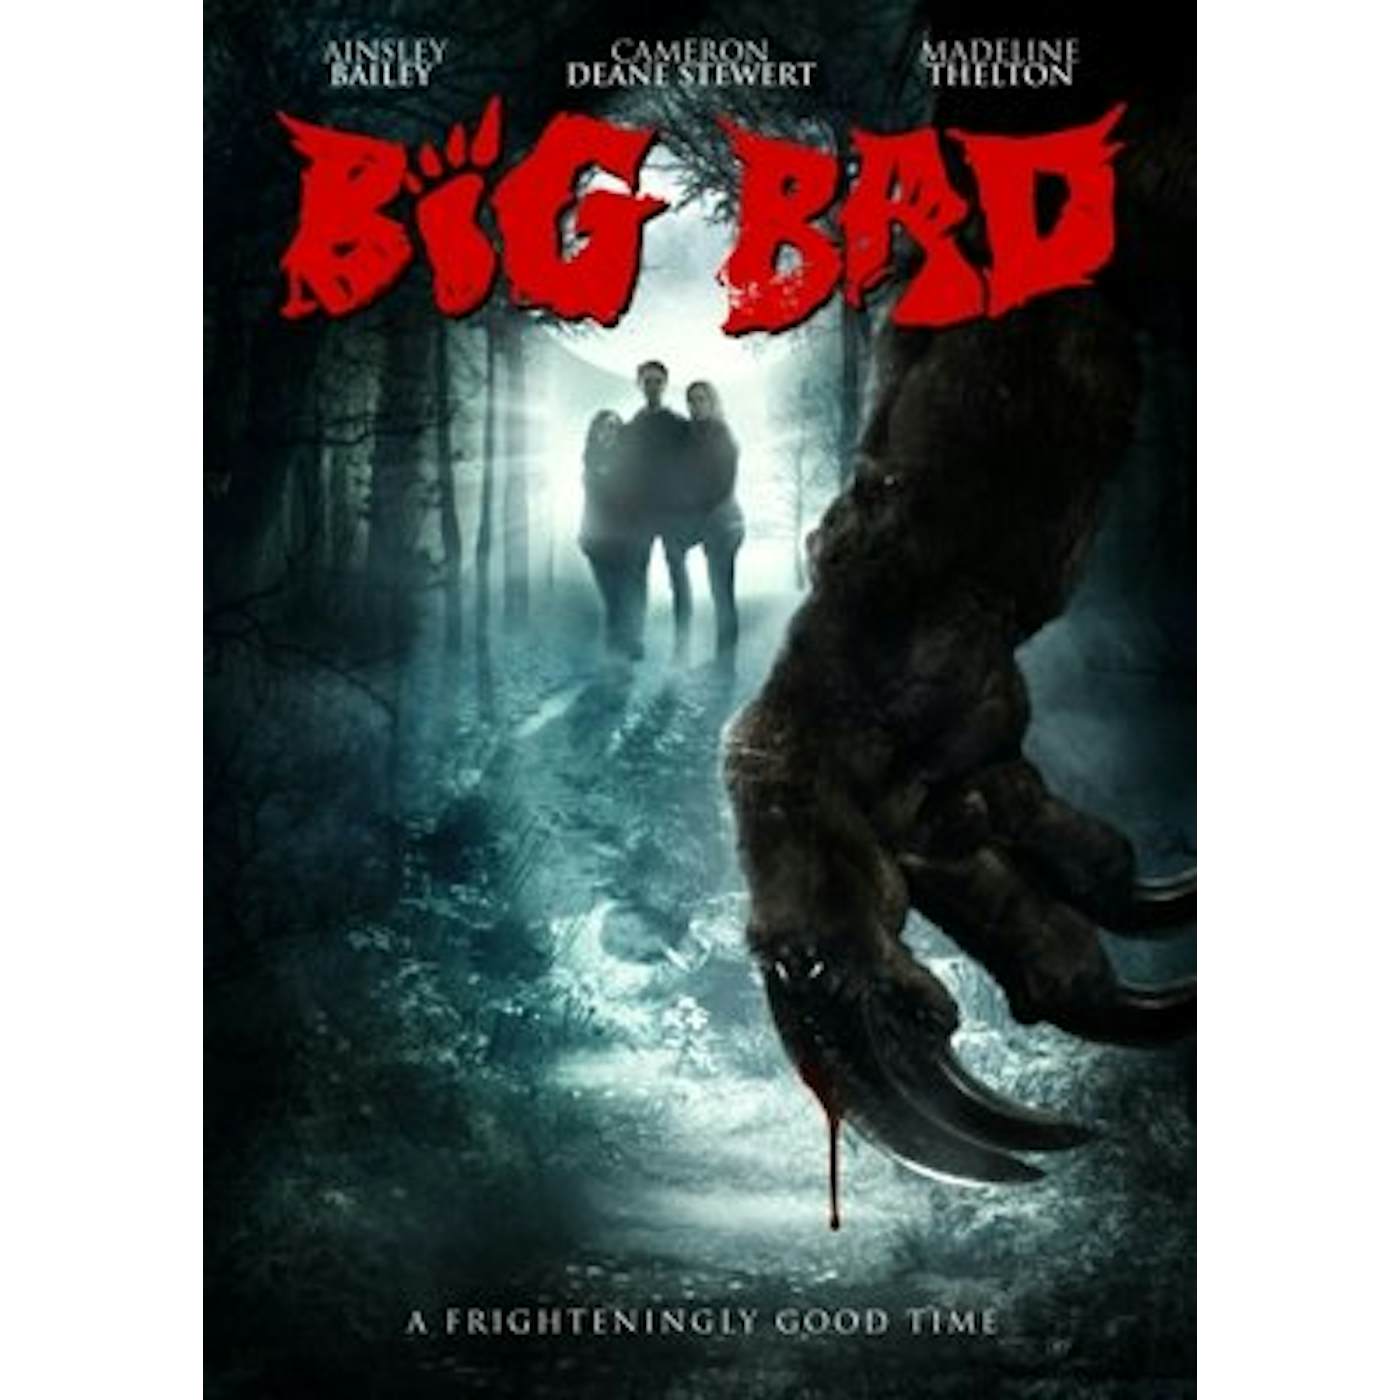 The Big Bad DVD